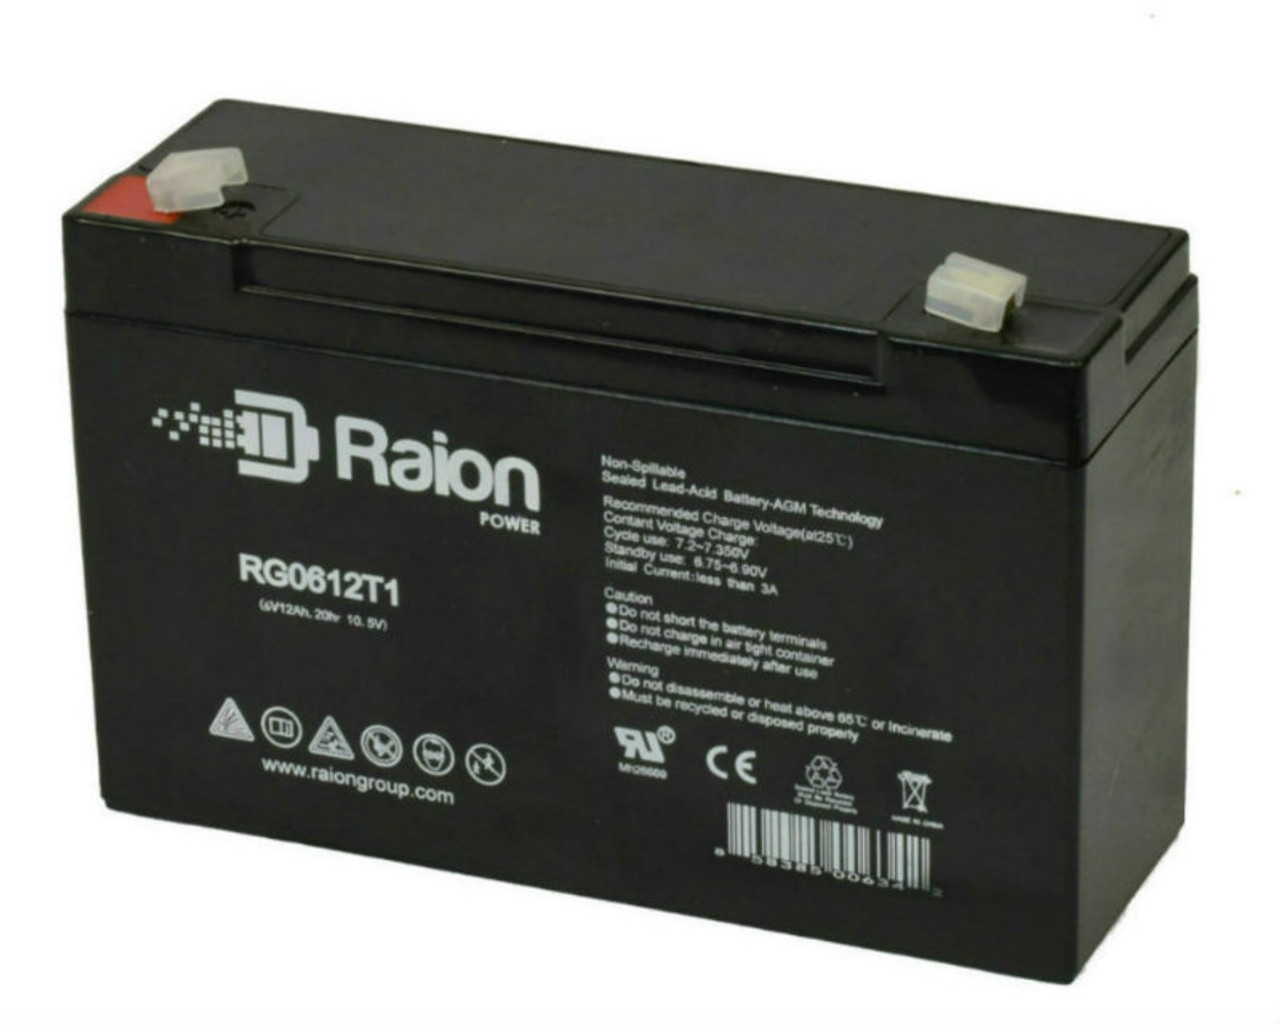 Raion Power RG06120T1 Replacement 6V 12Ah Emergency Light Battery for Chloride CFM50